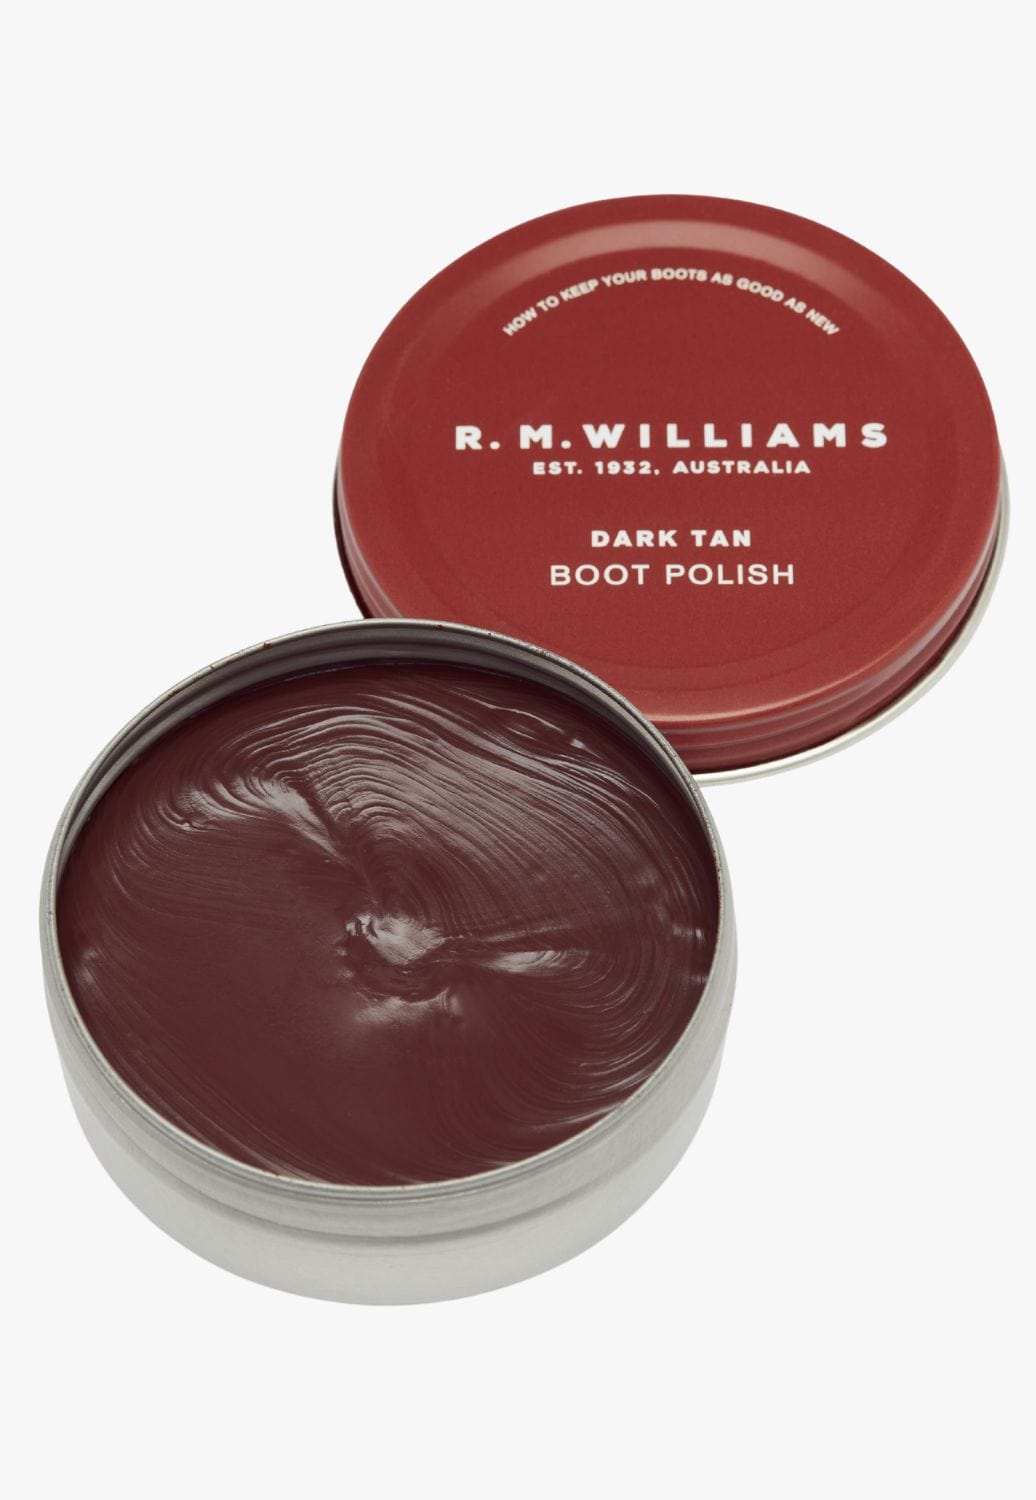 R.M. Williams Boots in Dark Tan